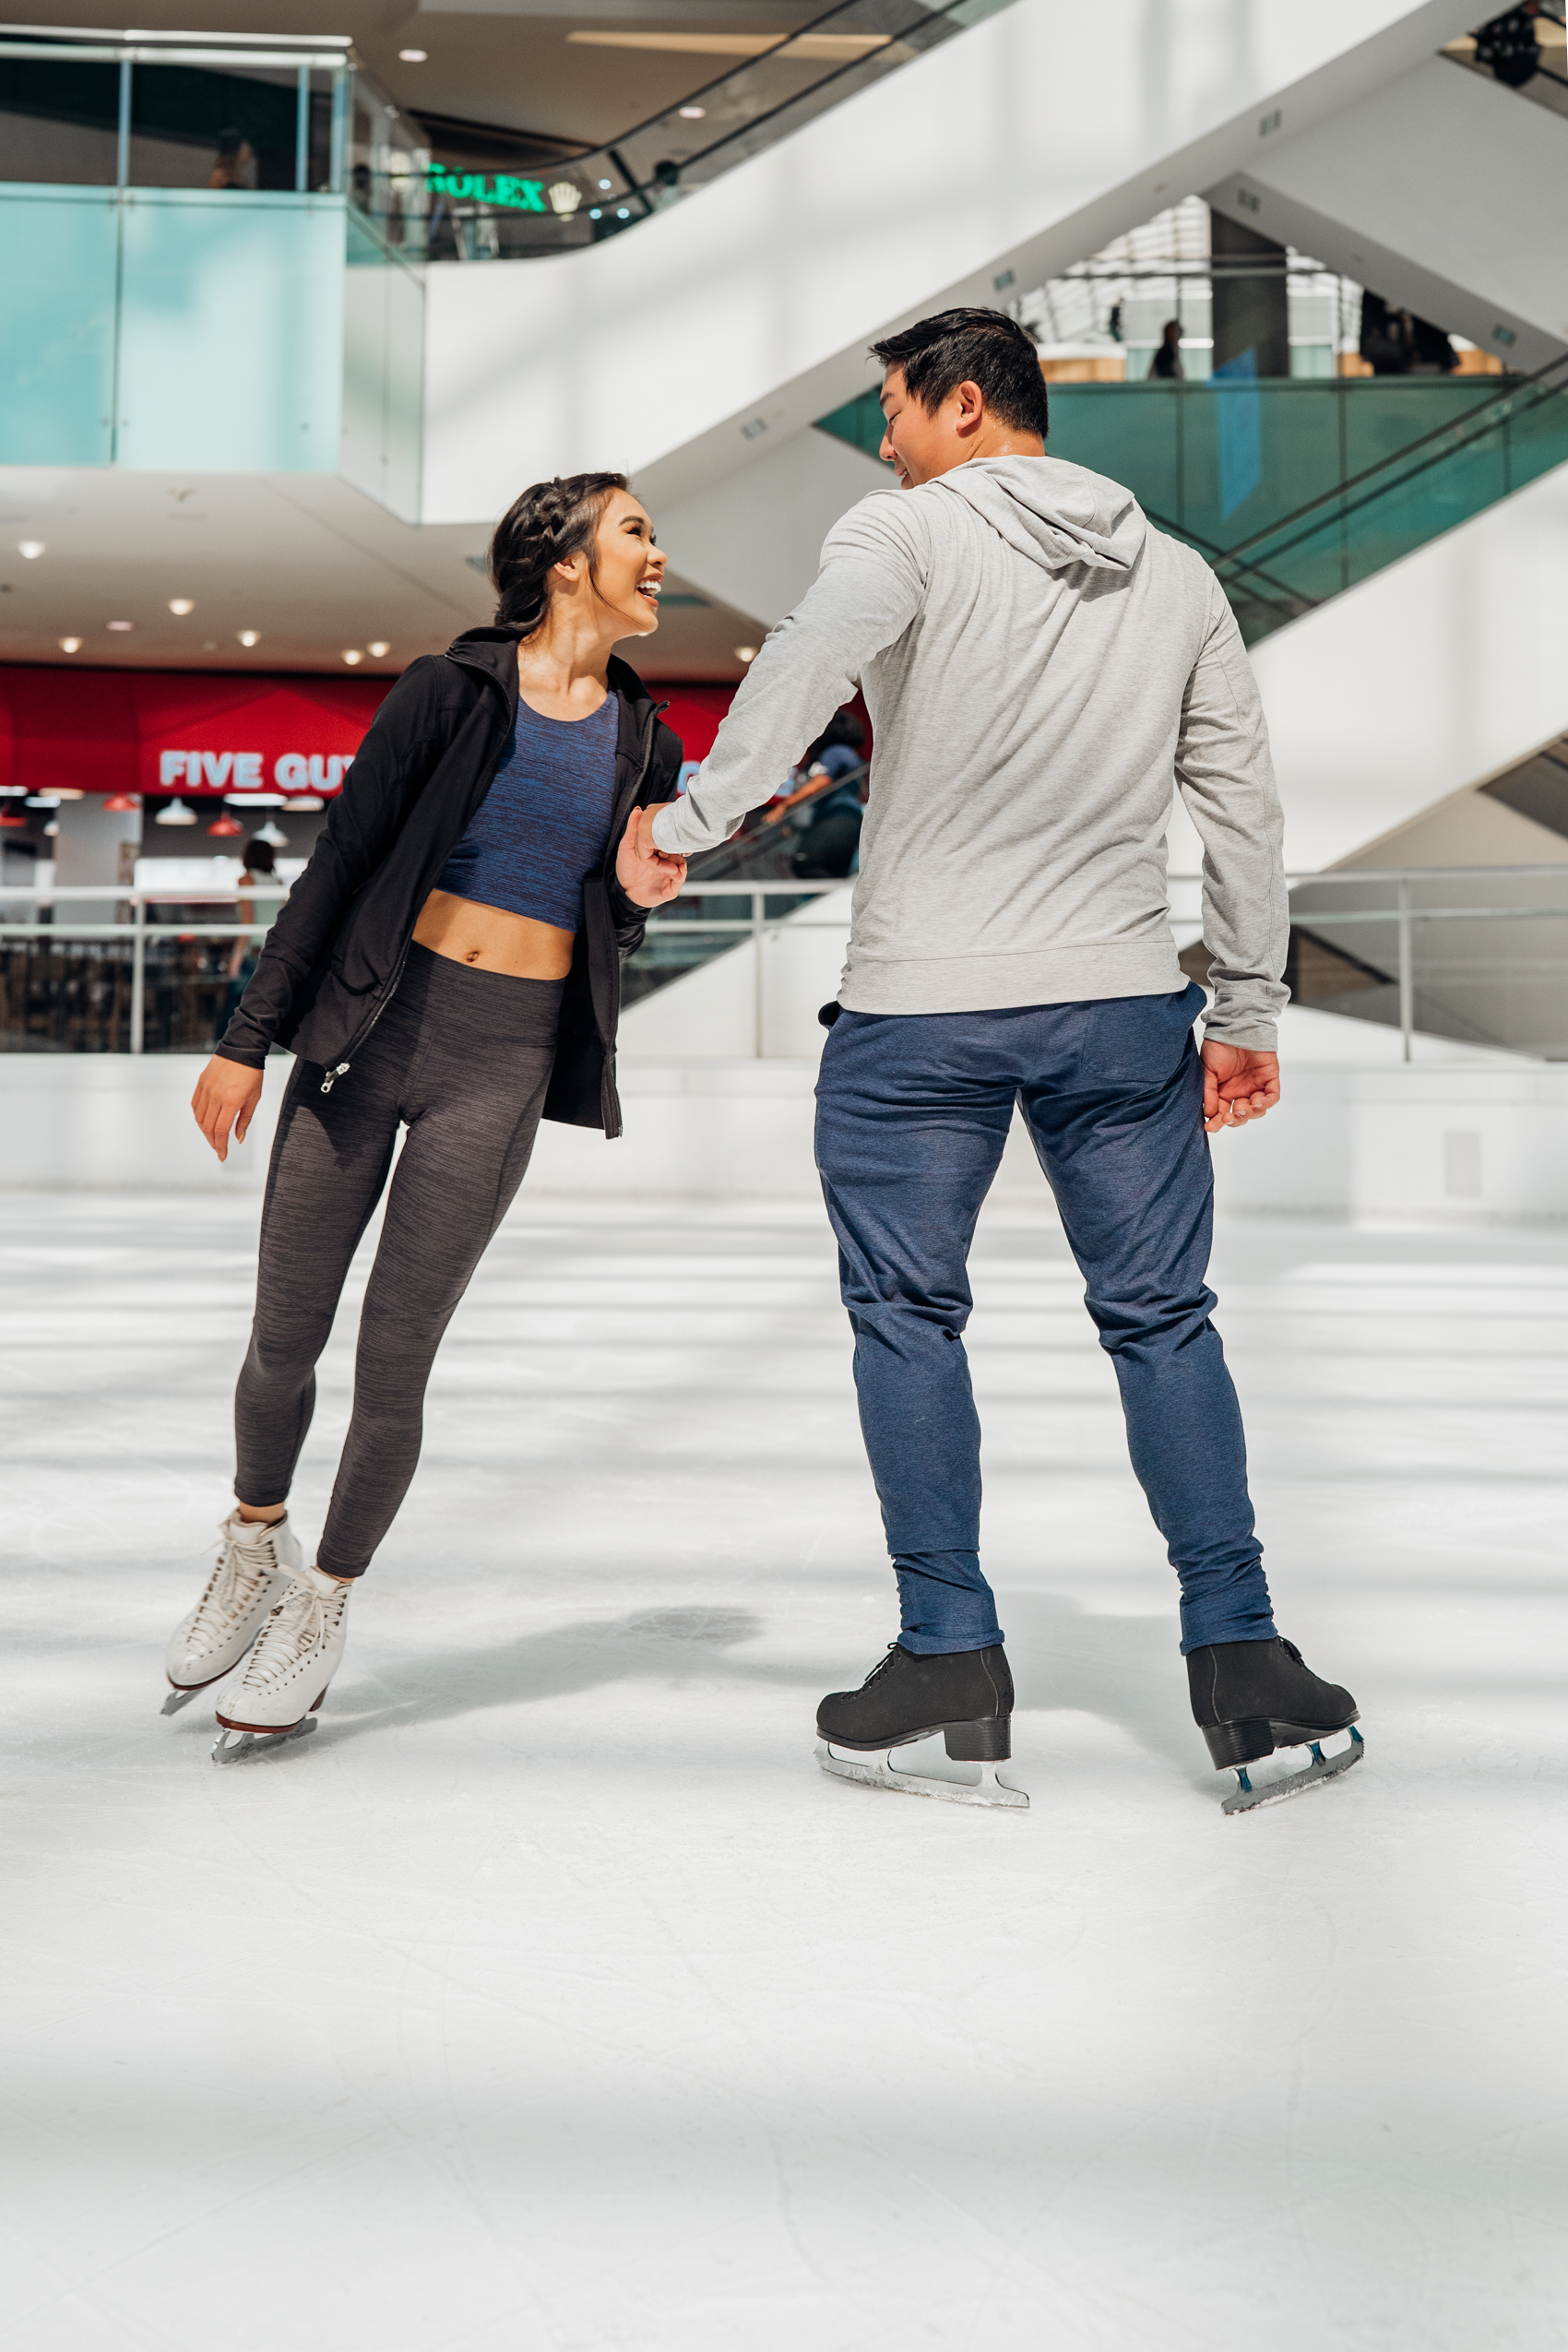 Fun date ideas: going figure skating at the Dallas Galleria